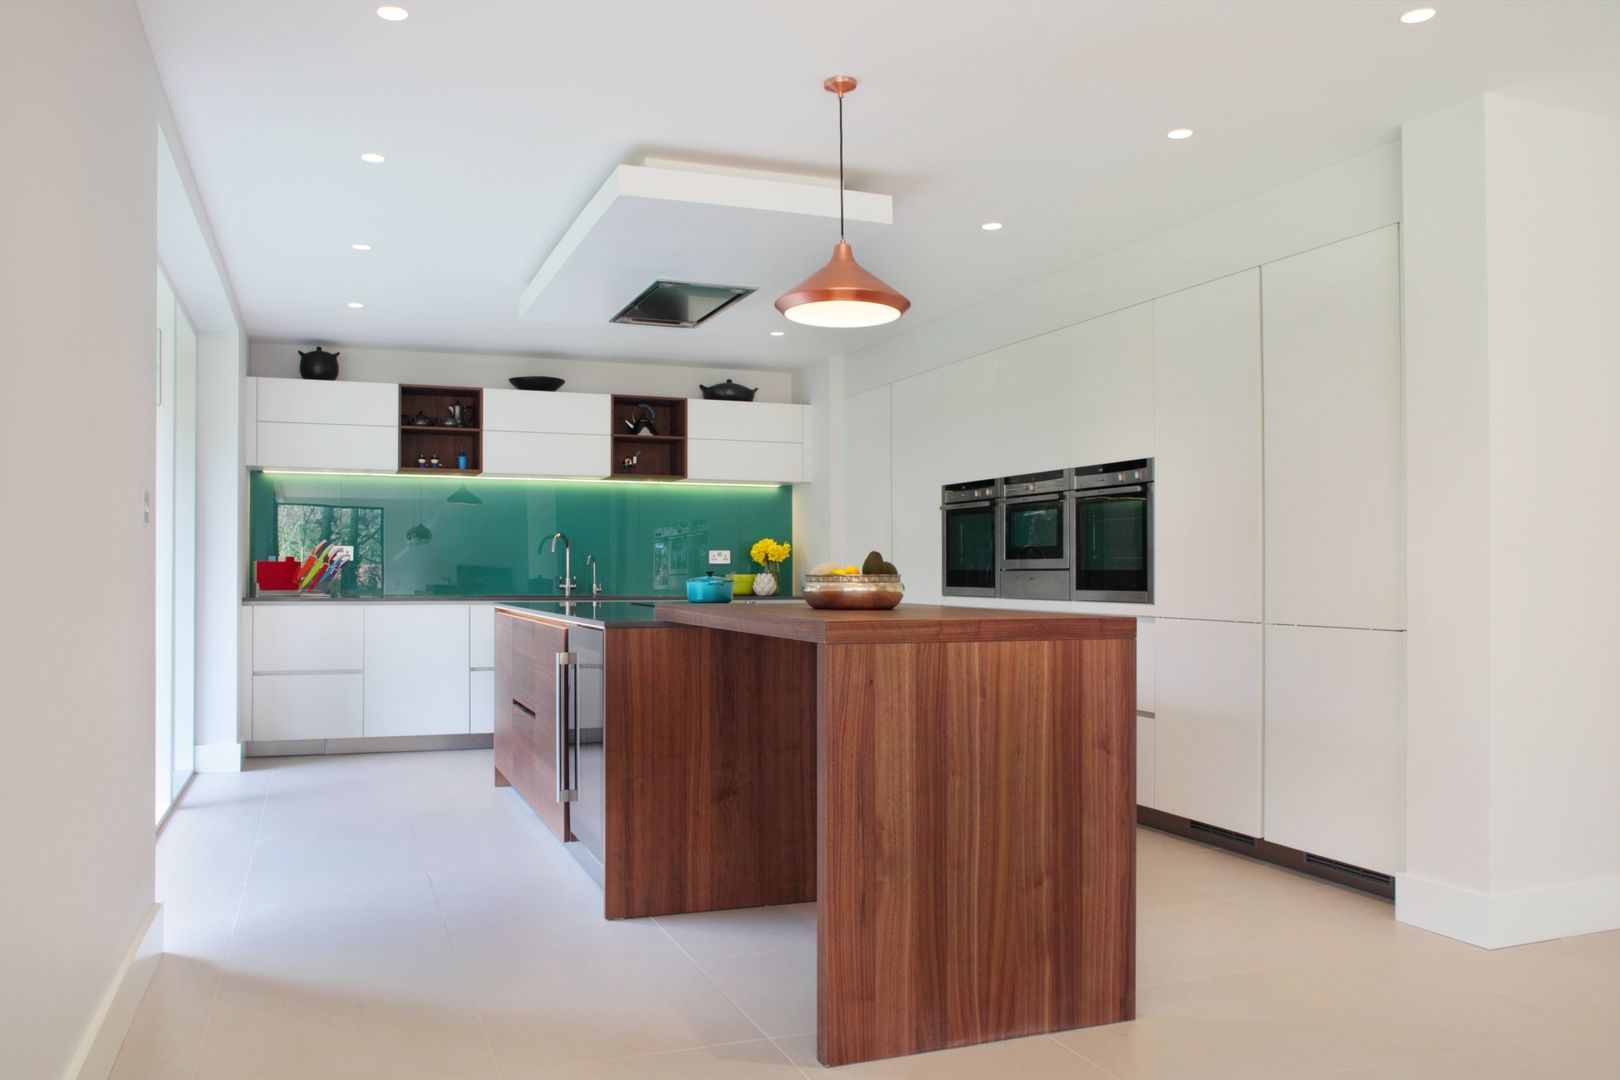 Contemporary Kitchen in Walnut and White Glass in-toto Kitchens Design Studio Marlow Cocinas modernas